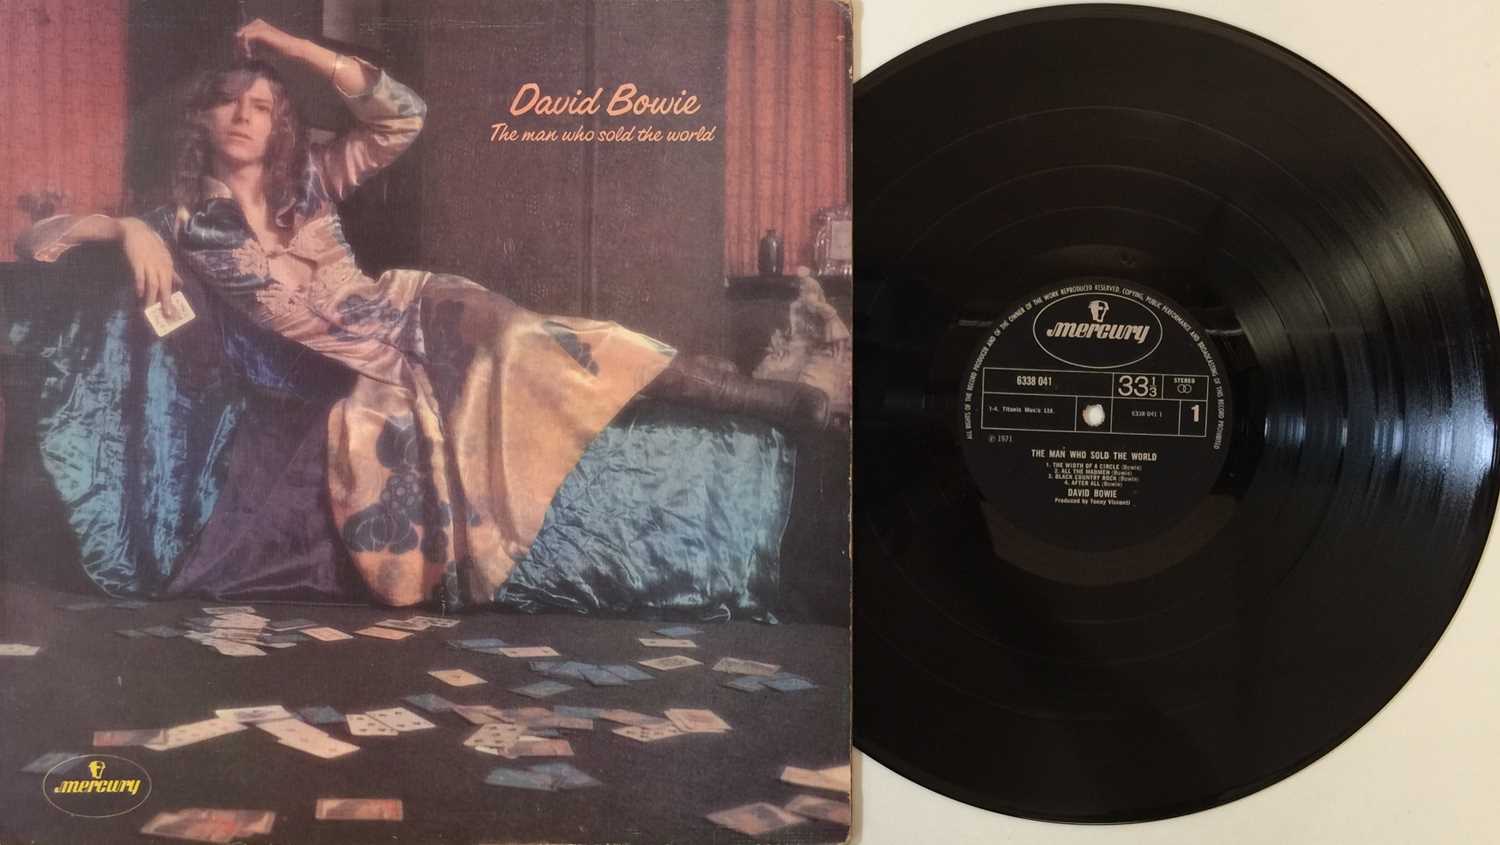 Lot 904 - DAVID BOWIE - THE MAN WHO SOLD THE WORLD LP - ORIGINAL UK 'DRESS SLEEVE' COPY - 'TONNY' (MERCURY 6338 041)